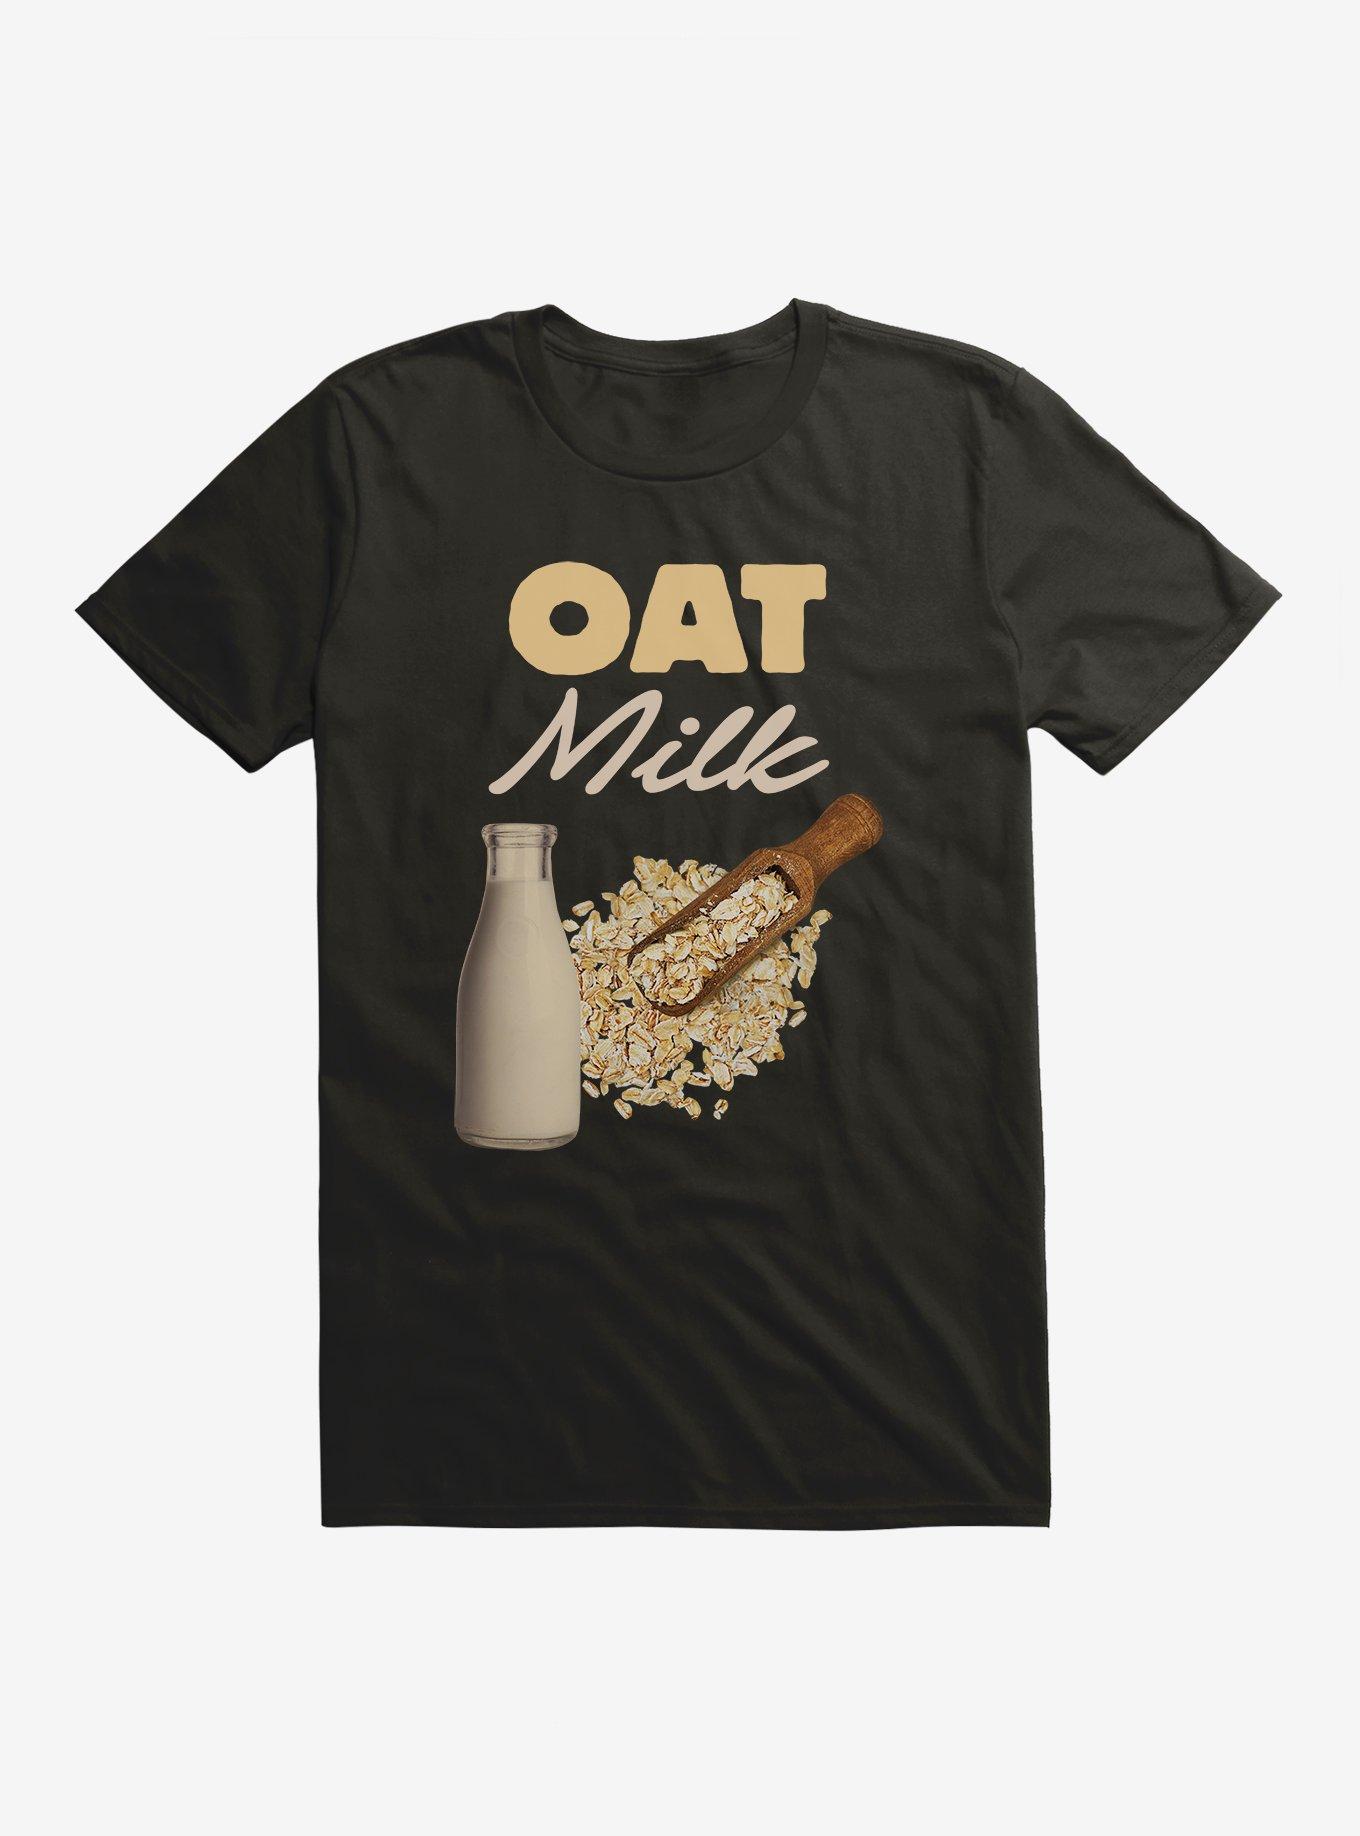 Hot Topic Oat Milk T-Shirt